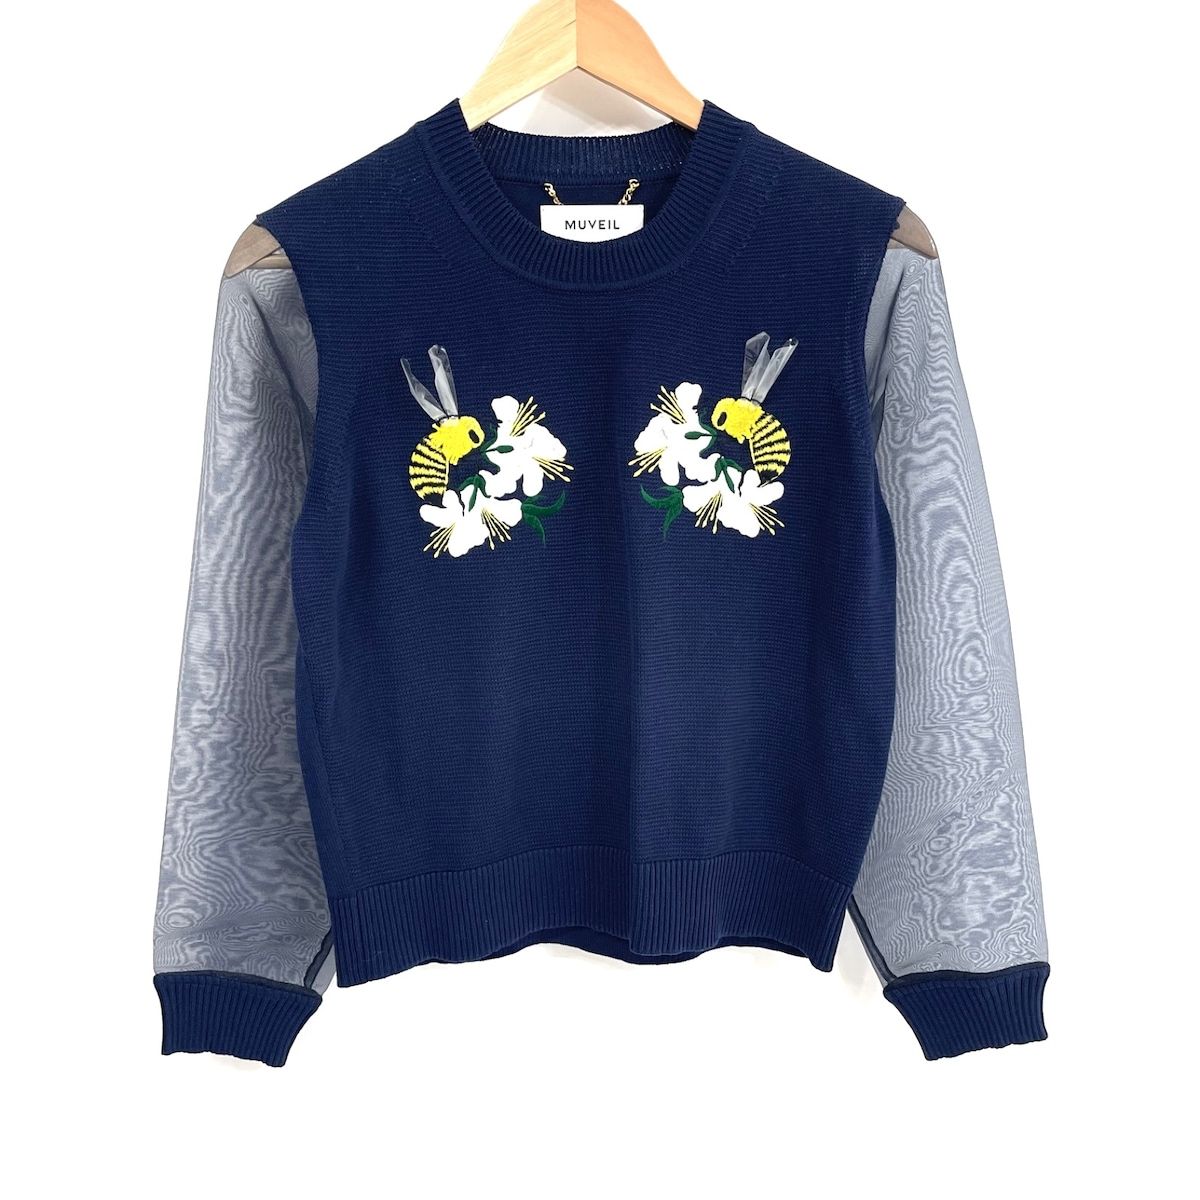 MUVEIL(ミュベール) 長袖セーター サイズ38 M レディース美品 - ネイビー×白×マルチ クルーネック/蜂/ビーズ/袖シースルー